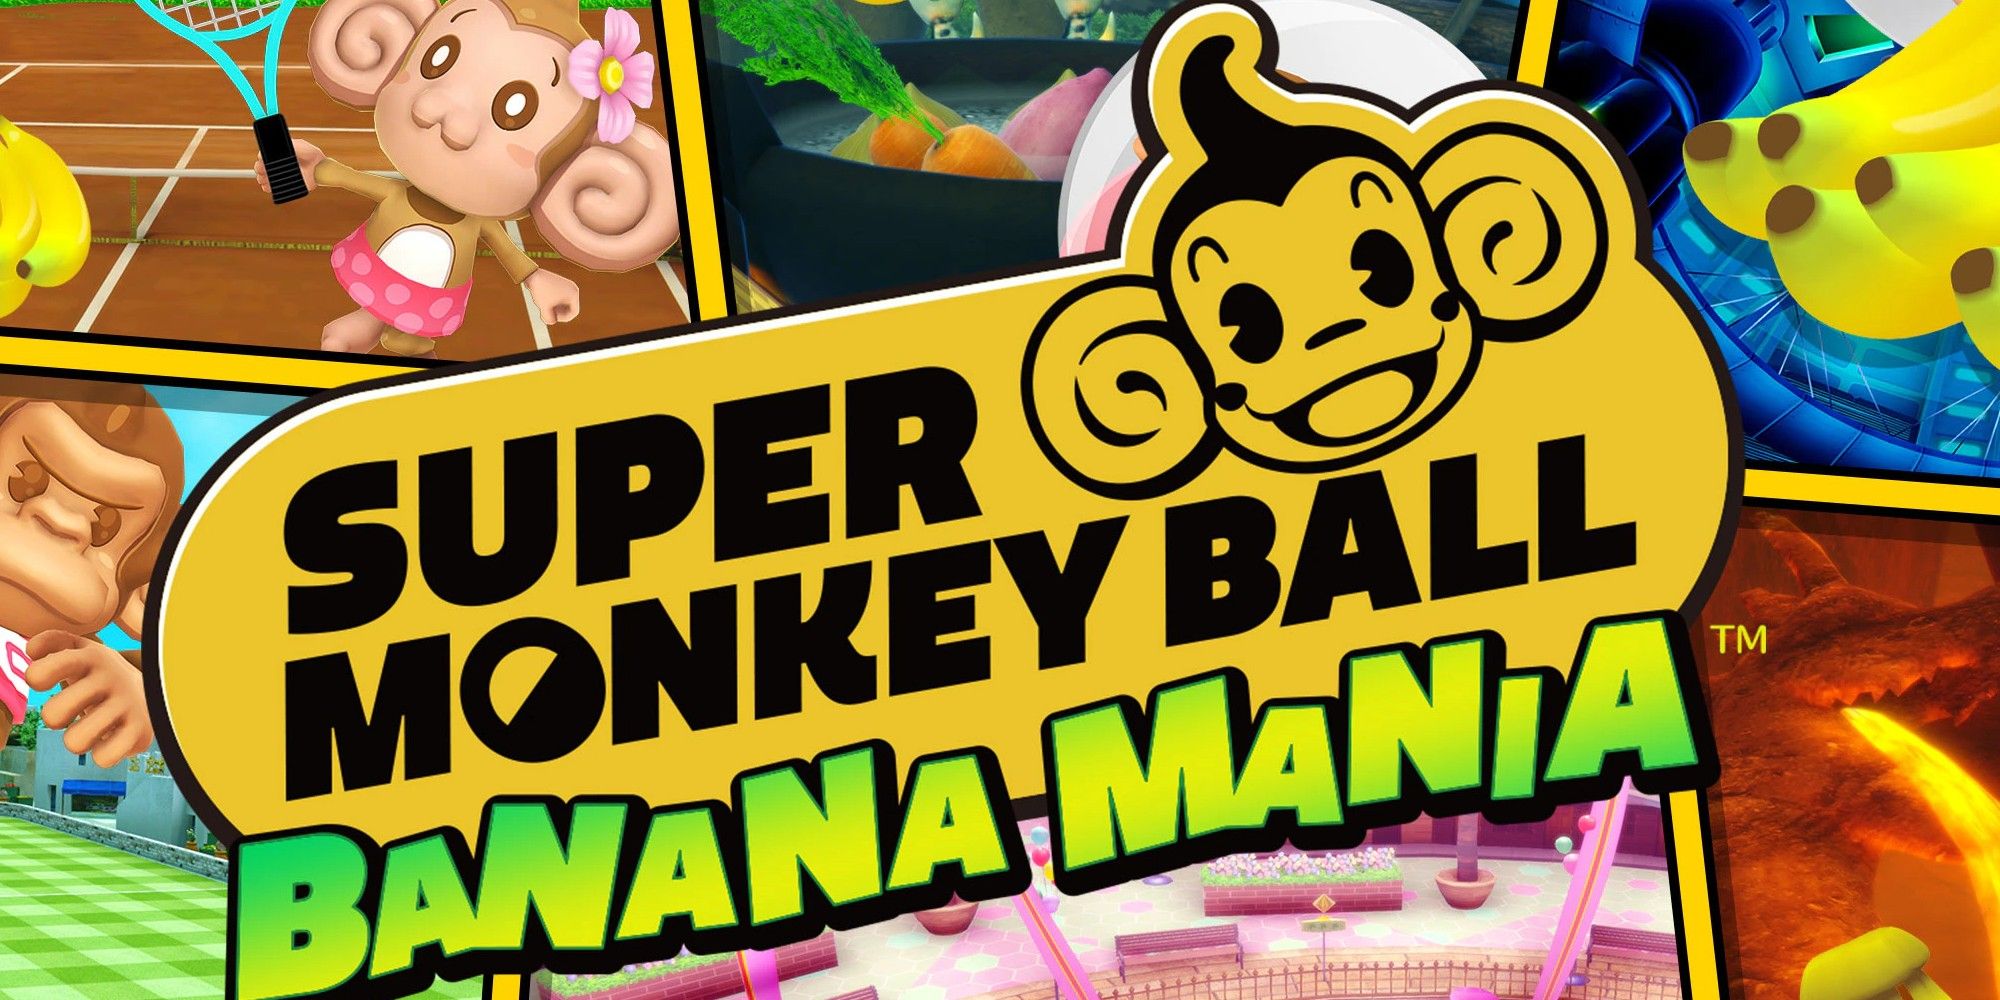 super monkey ball banana mania target